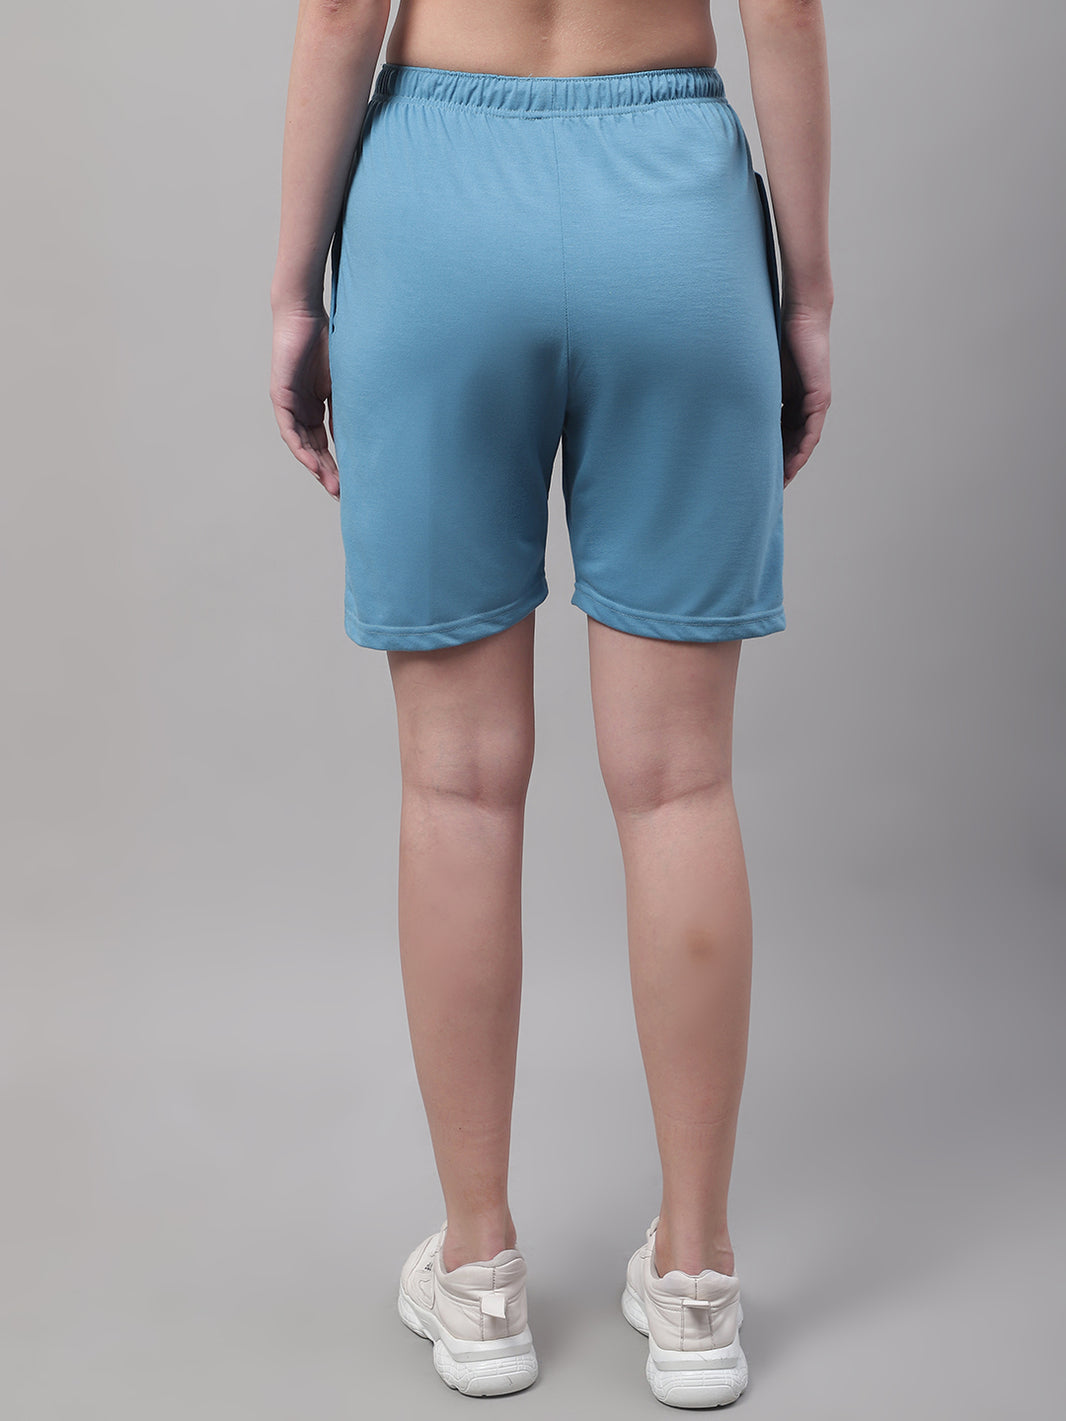 Vimal Jonney Blue Regular fit Cotton Shorts for Women